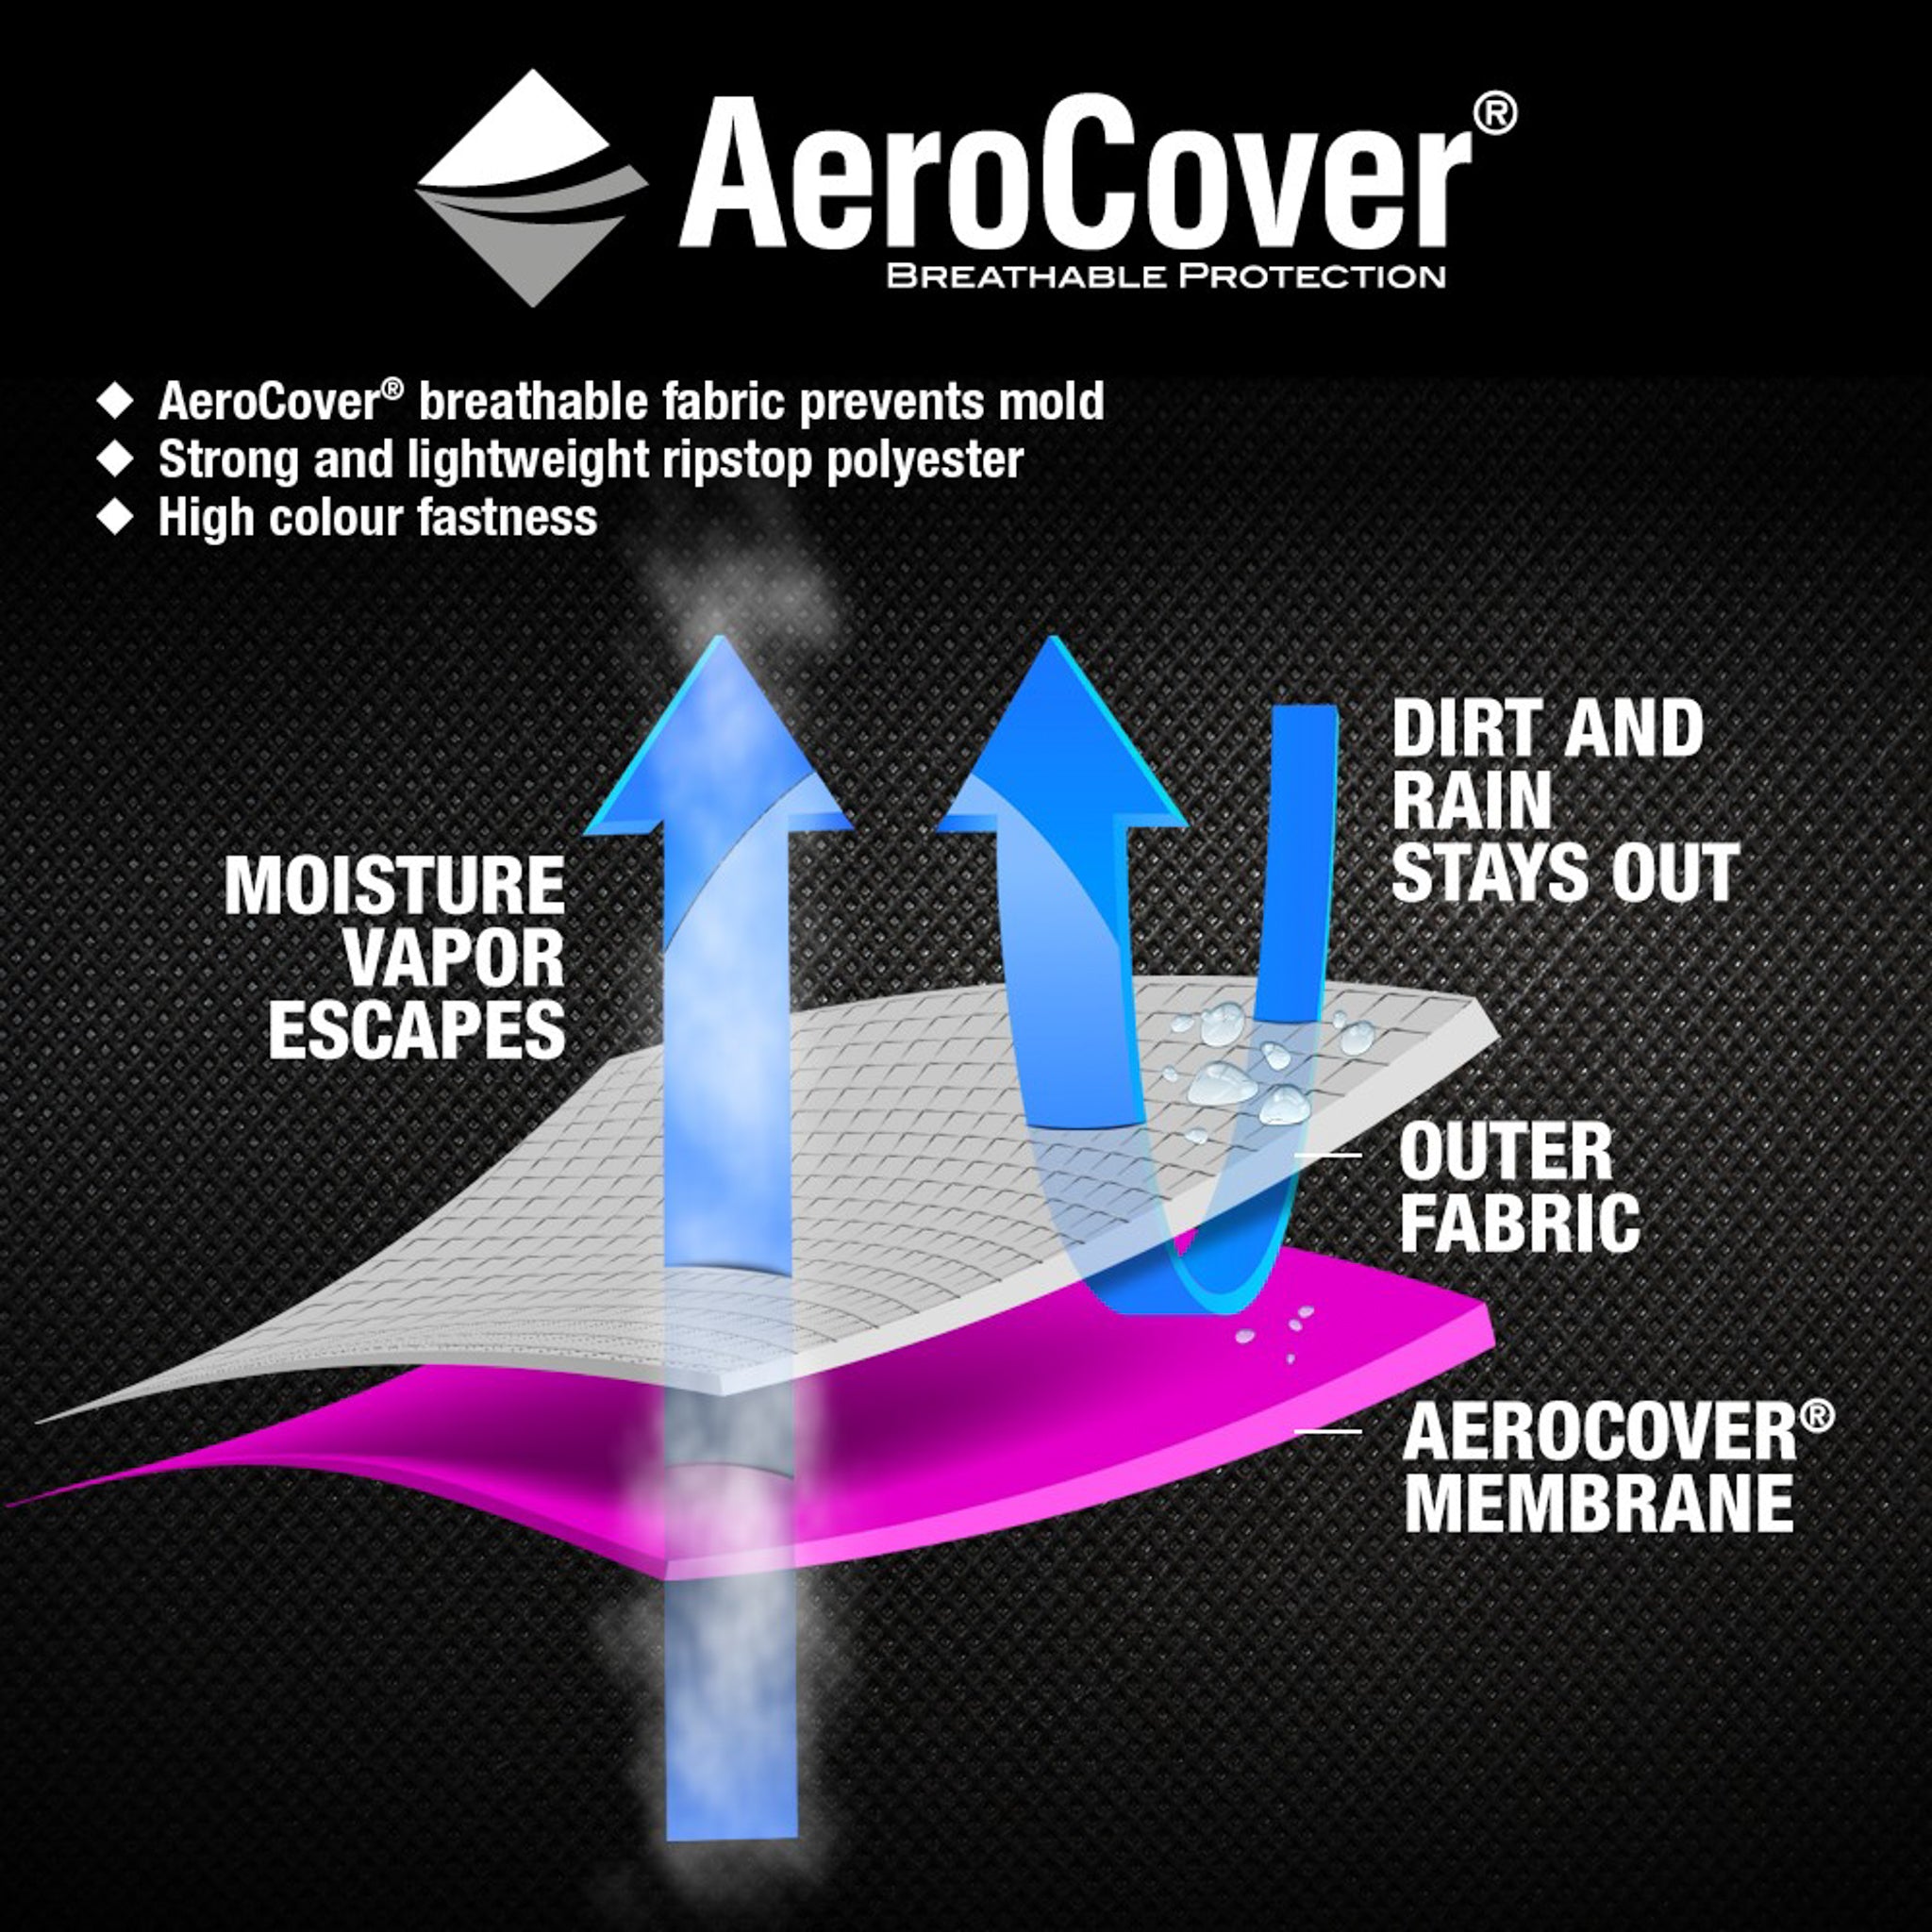 AeroCover - Table Cover 160x100x70cm high